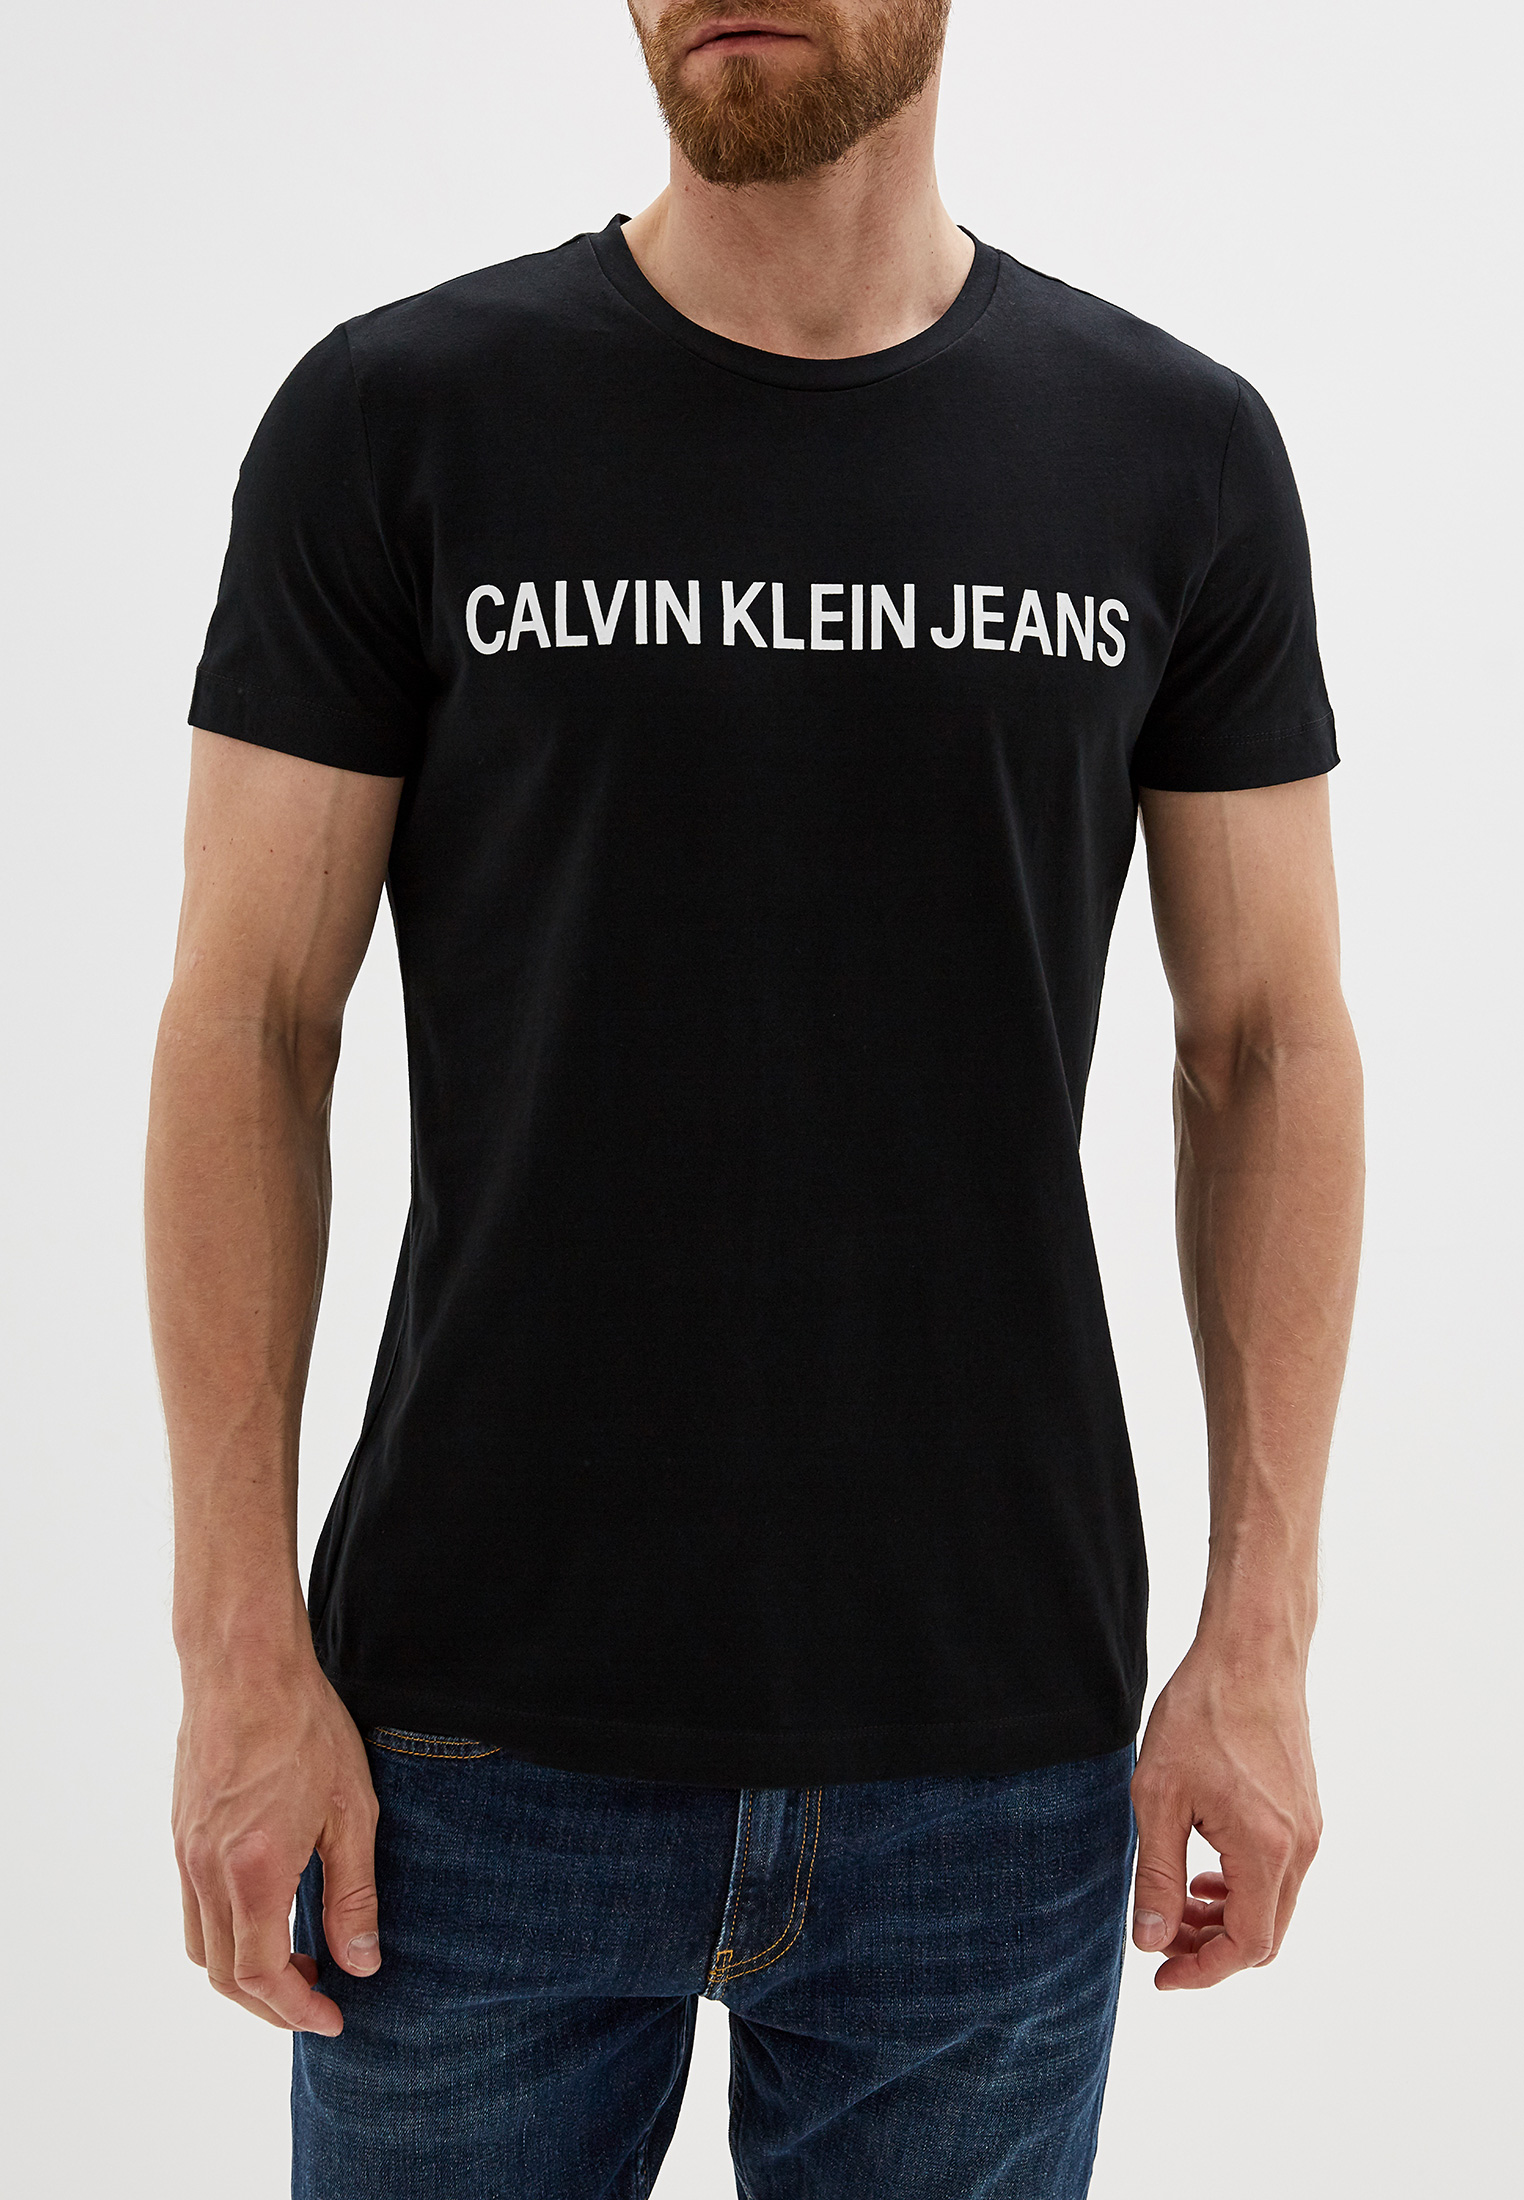 Футболки кельвин кляйн купить. Calvin Klein Jeans футболка черная. Футболка Calvin Кляйн. Черная футболка Кельвин Кляйн. Футболка Кэлвин Кляйн чёрная.